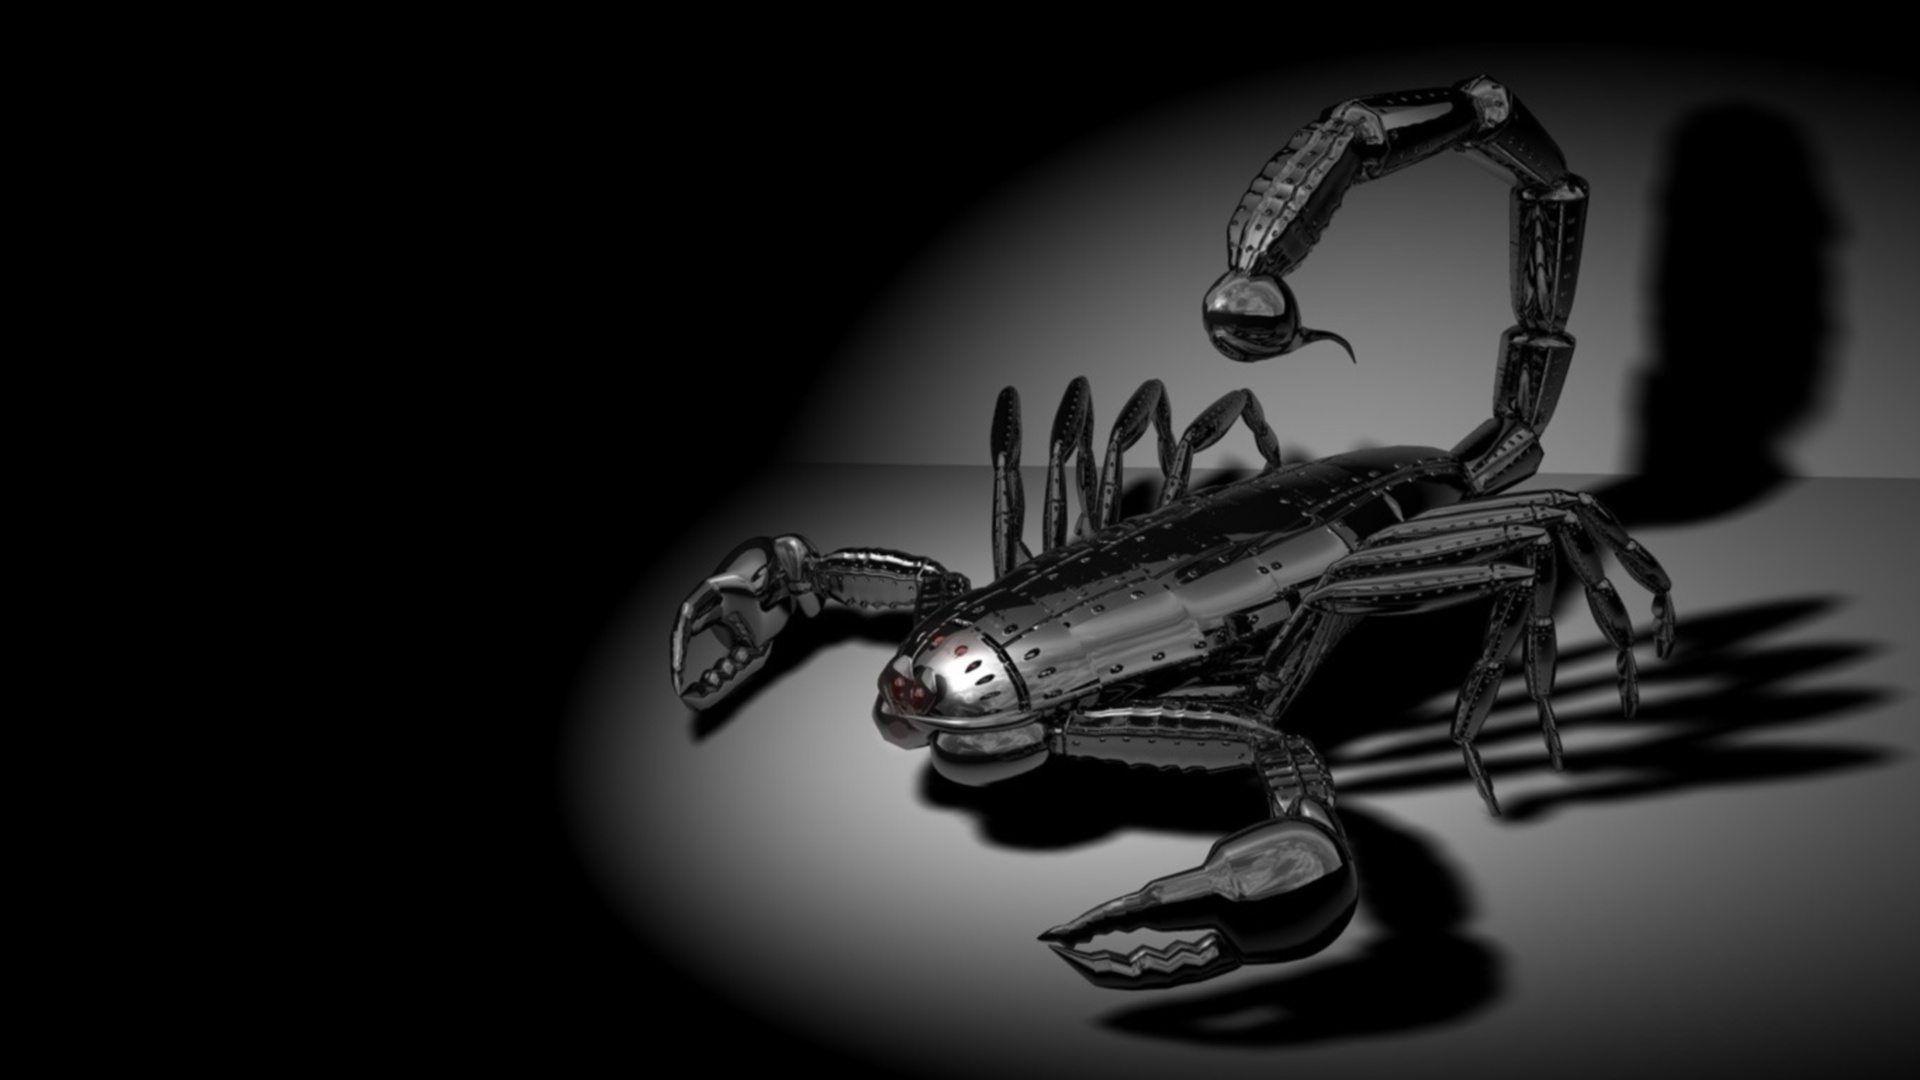 Black Scorpion HD Wallpaper From Gallsource.com. Robot